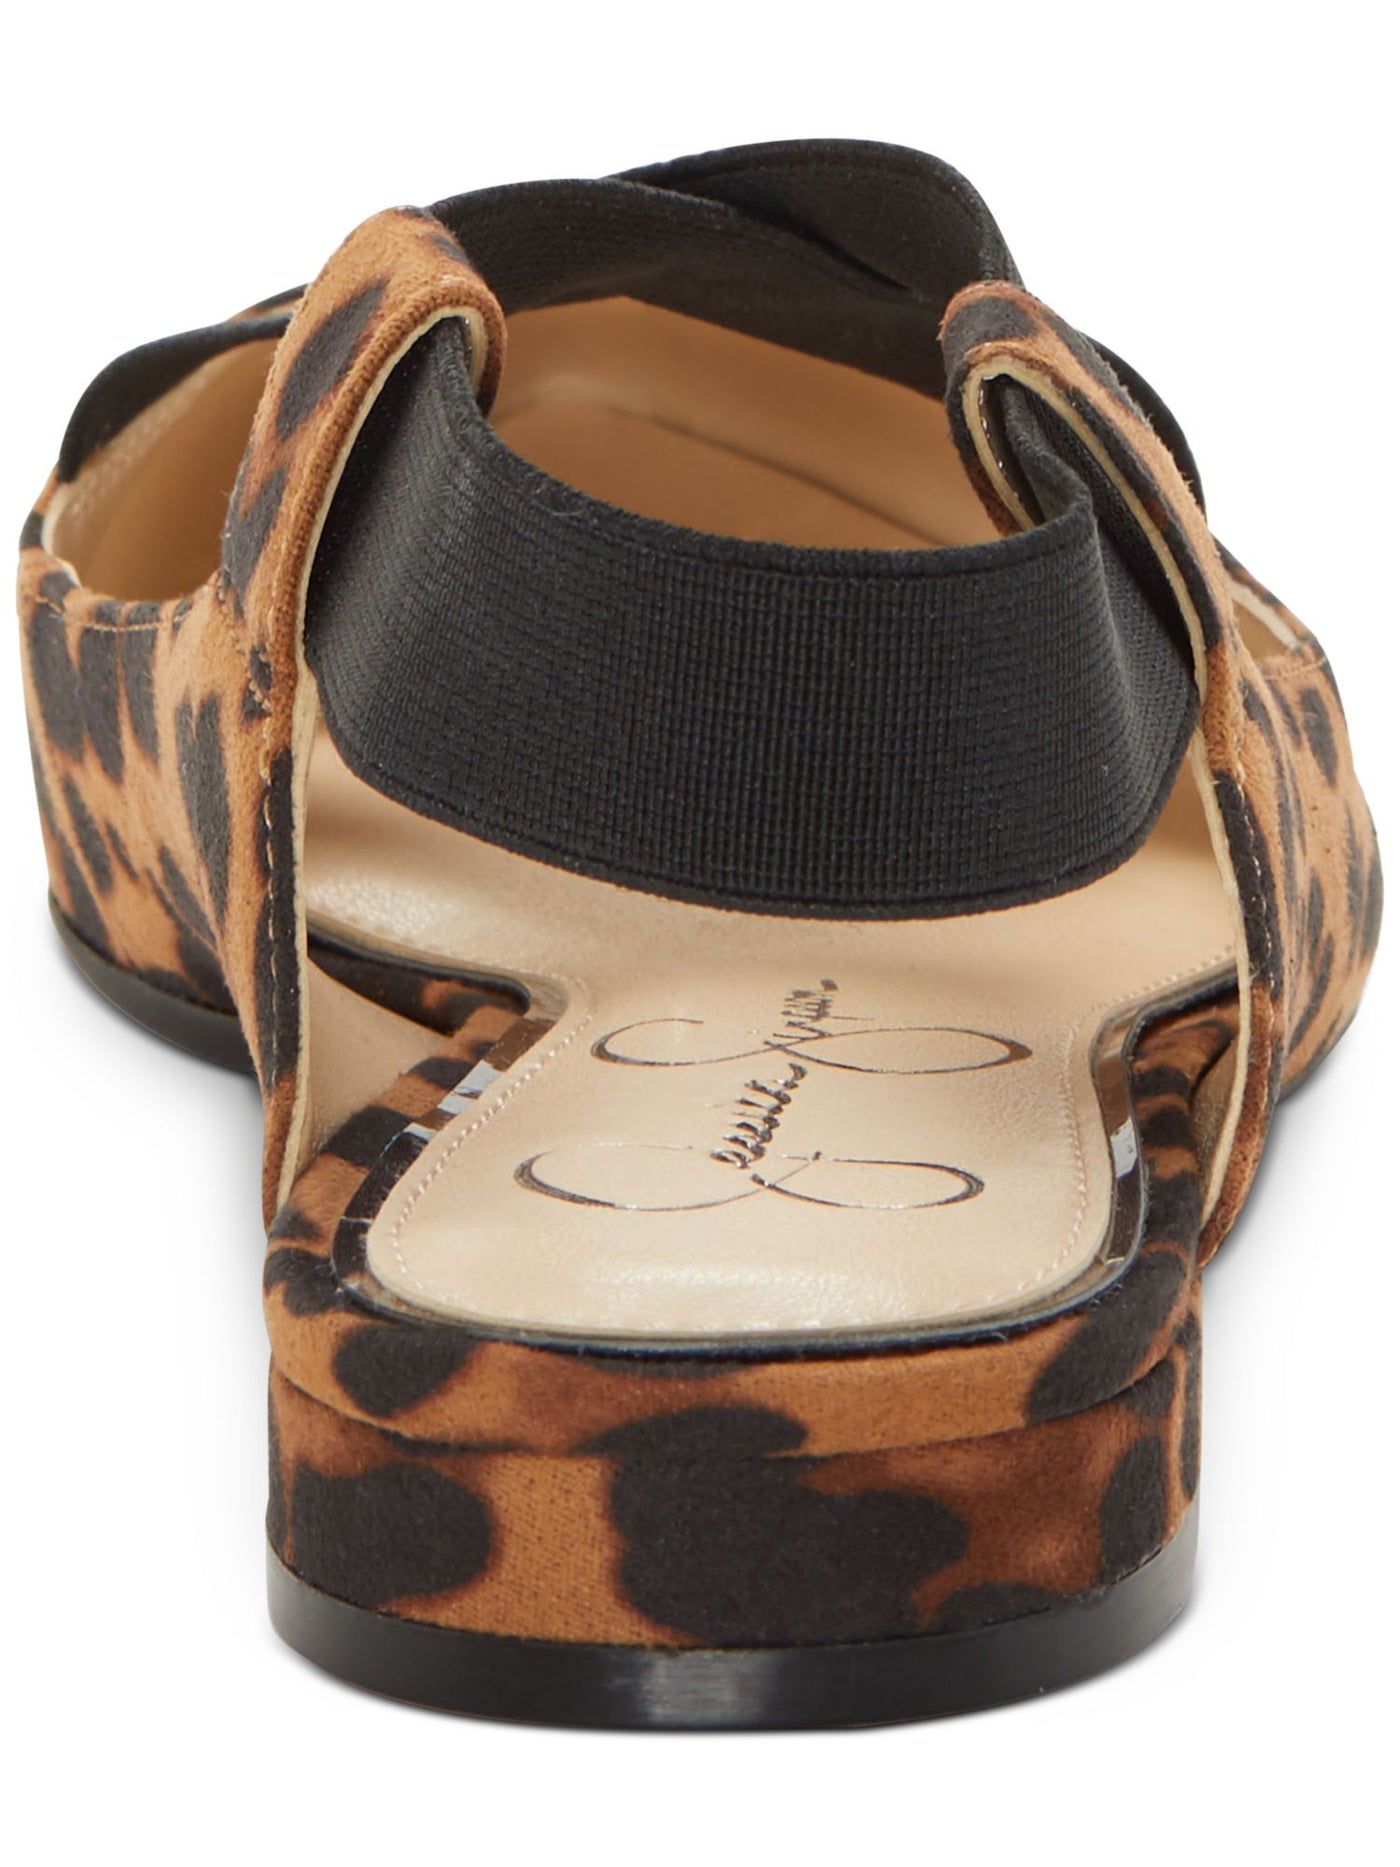 JESSICA SIMPSON Womens Brown Leopard Print 1/2 Heel Slingback Stretch Padded Lurina Pointed Toe Block Heel Slip On Flats Shoes 6 M